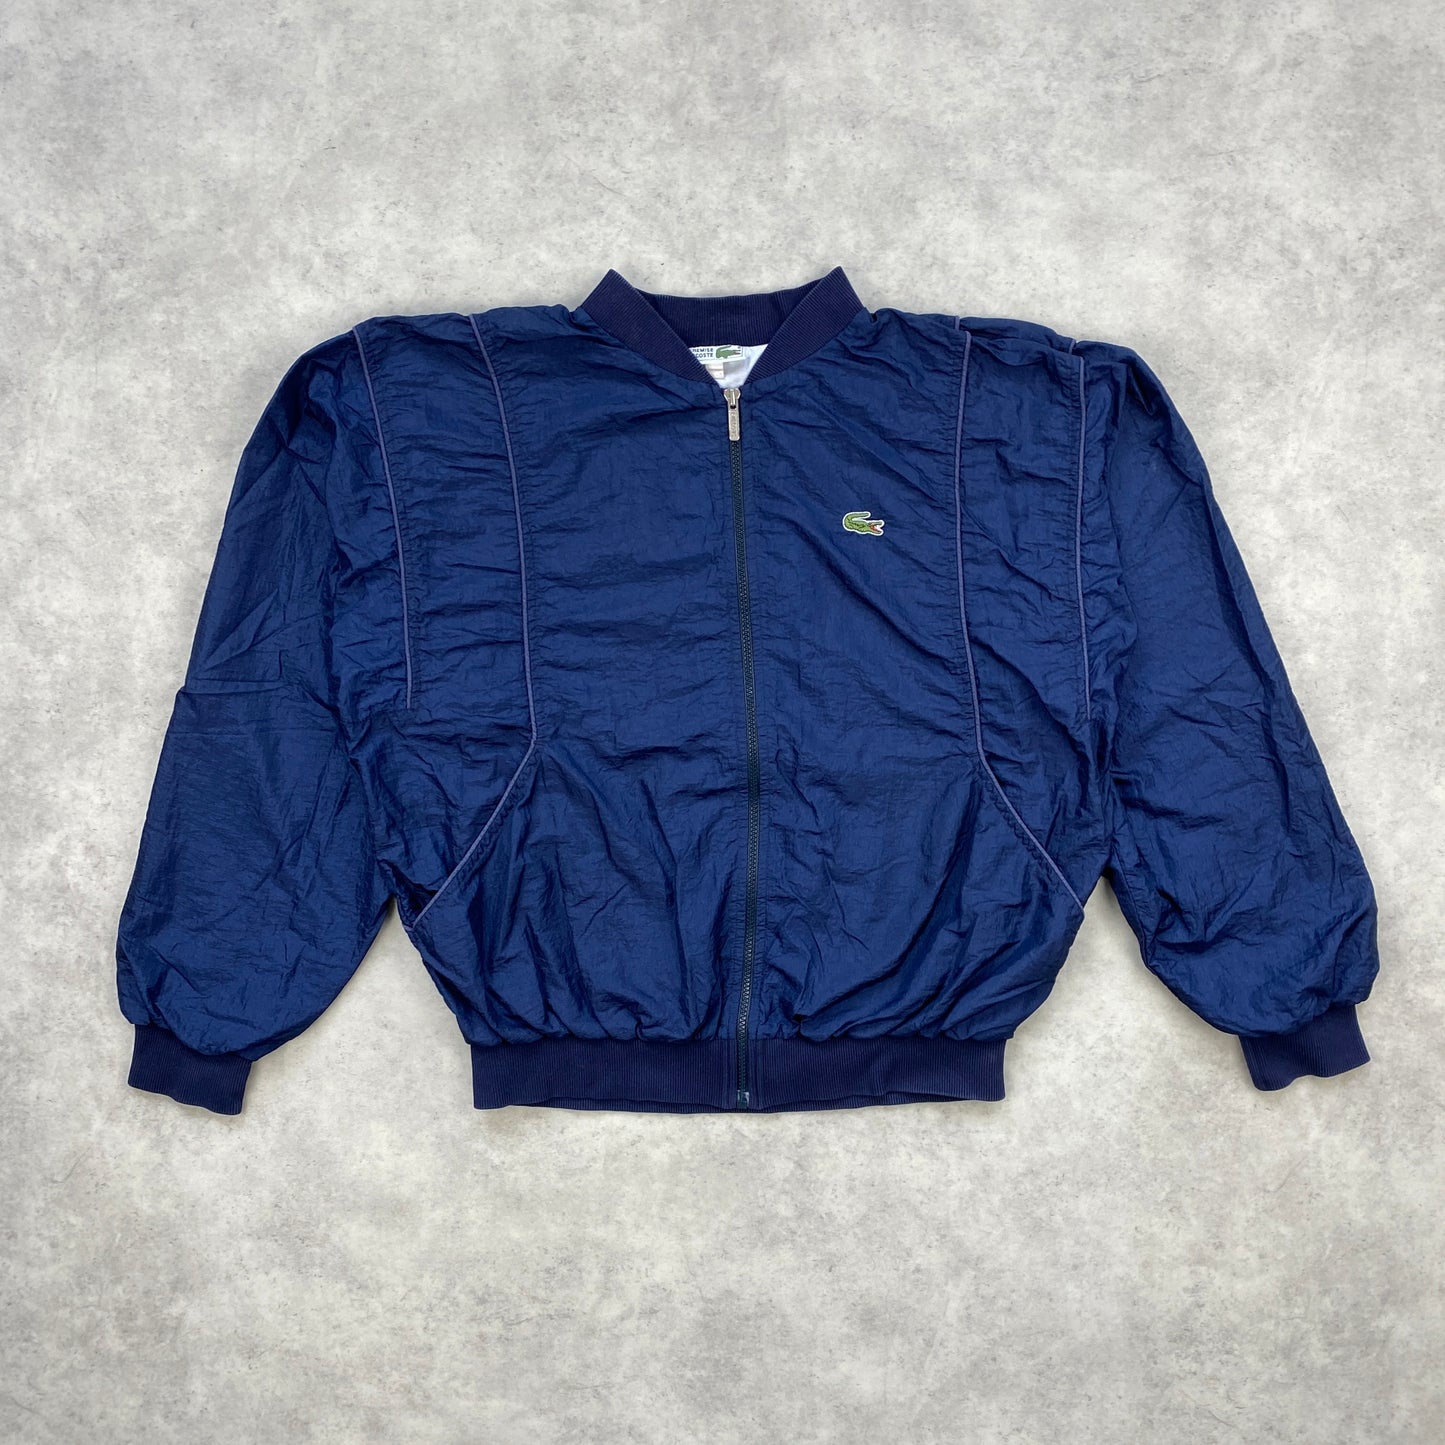 Lacoste RARE track jacket (M)